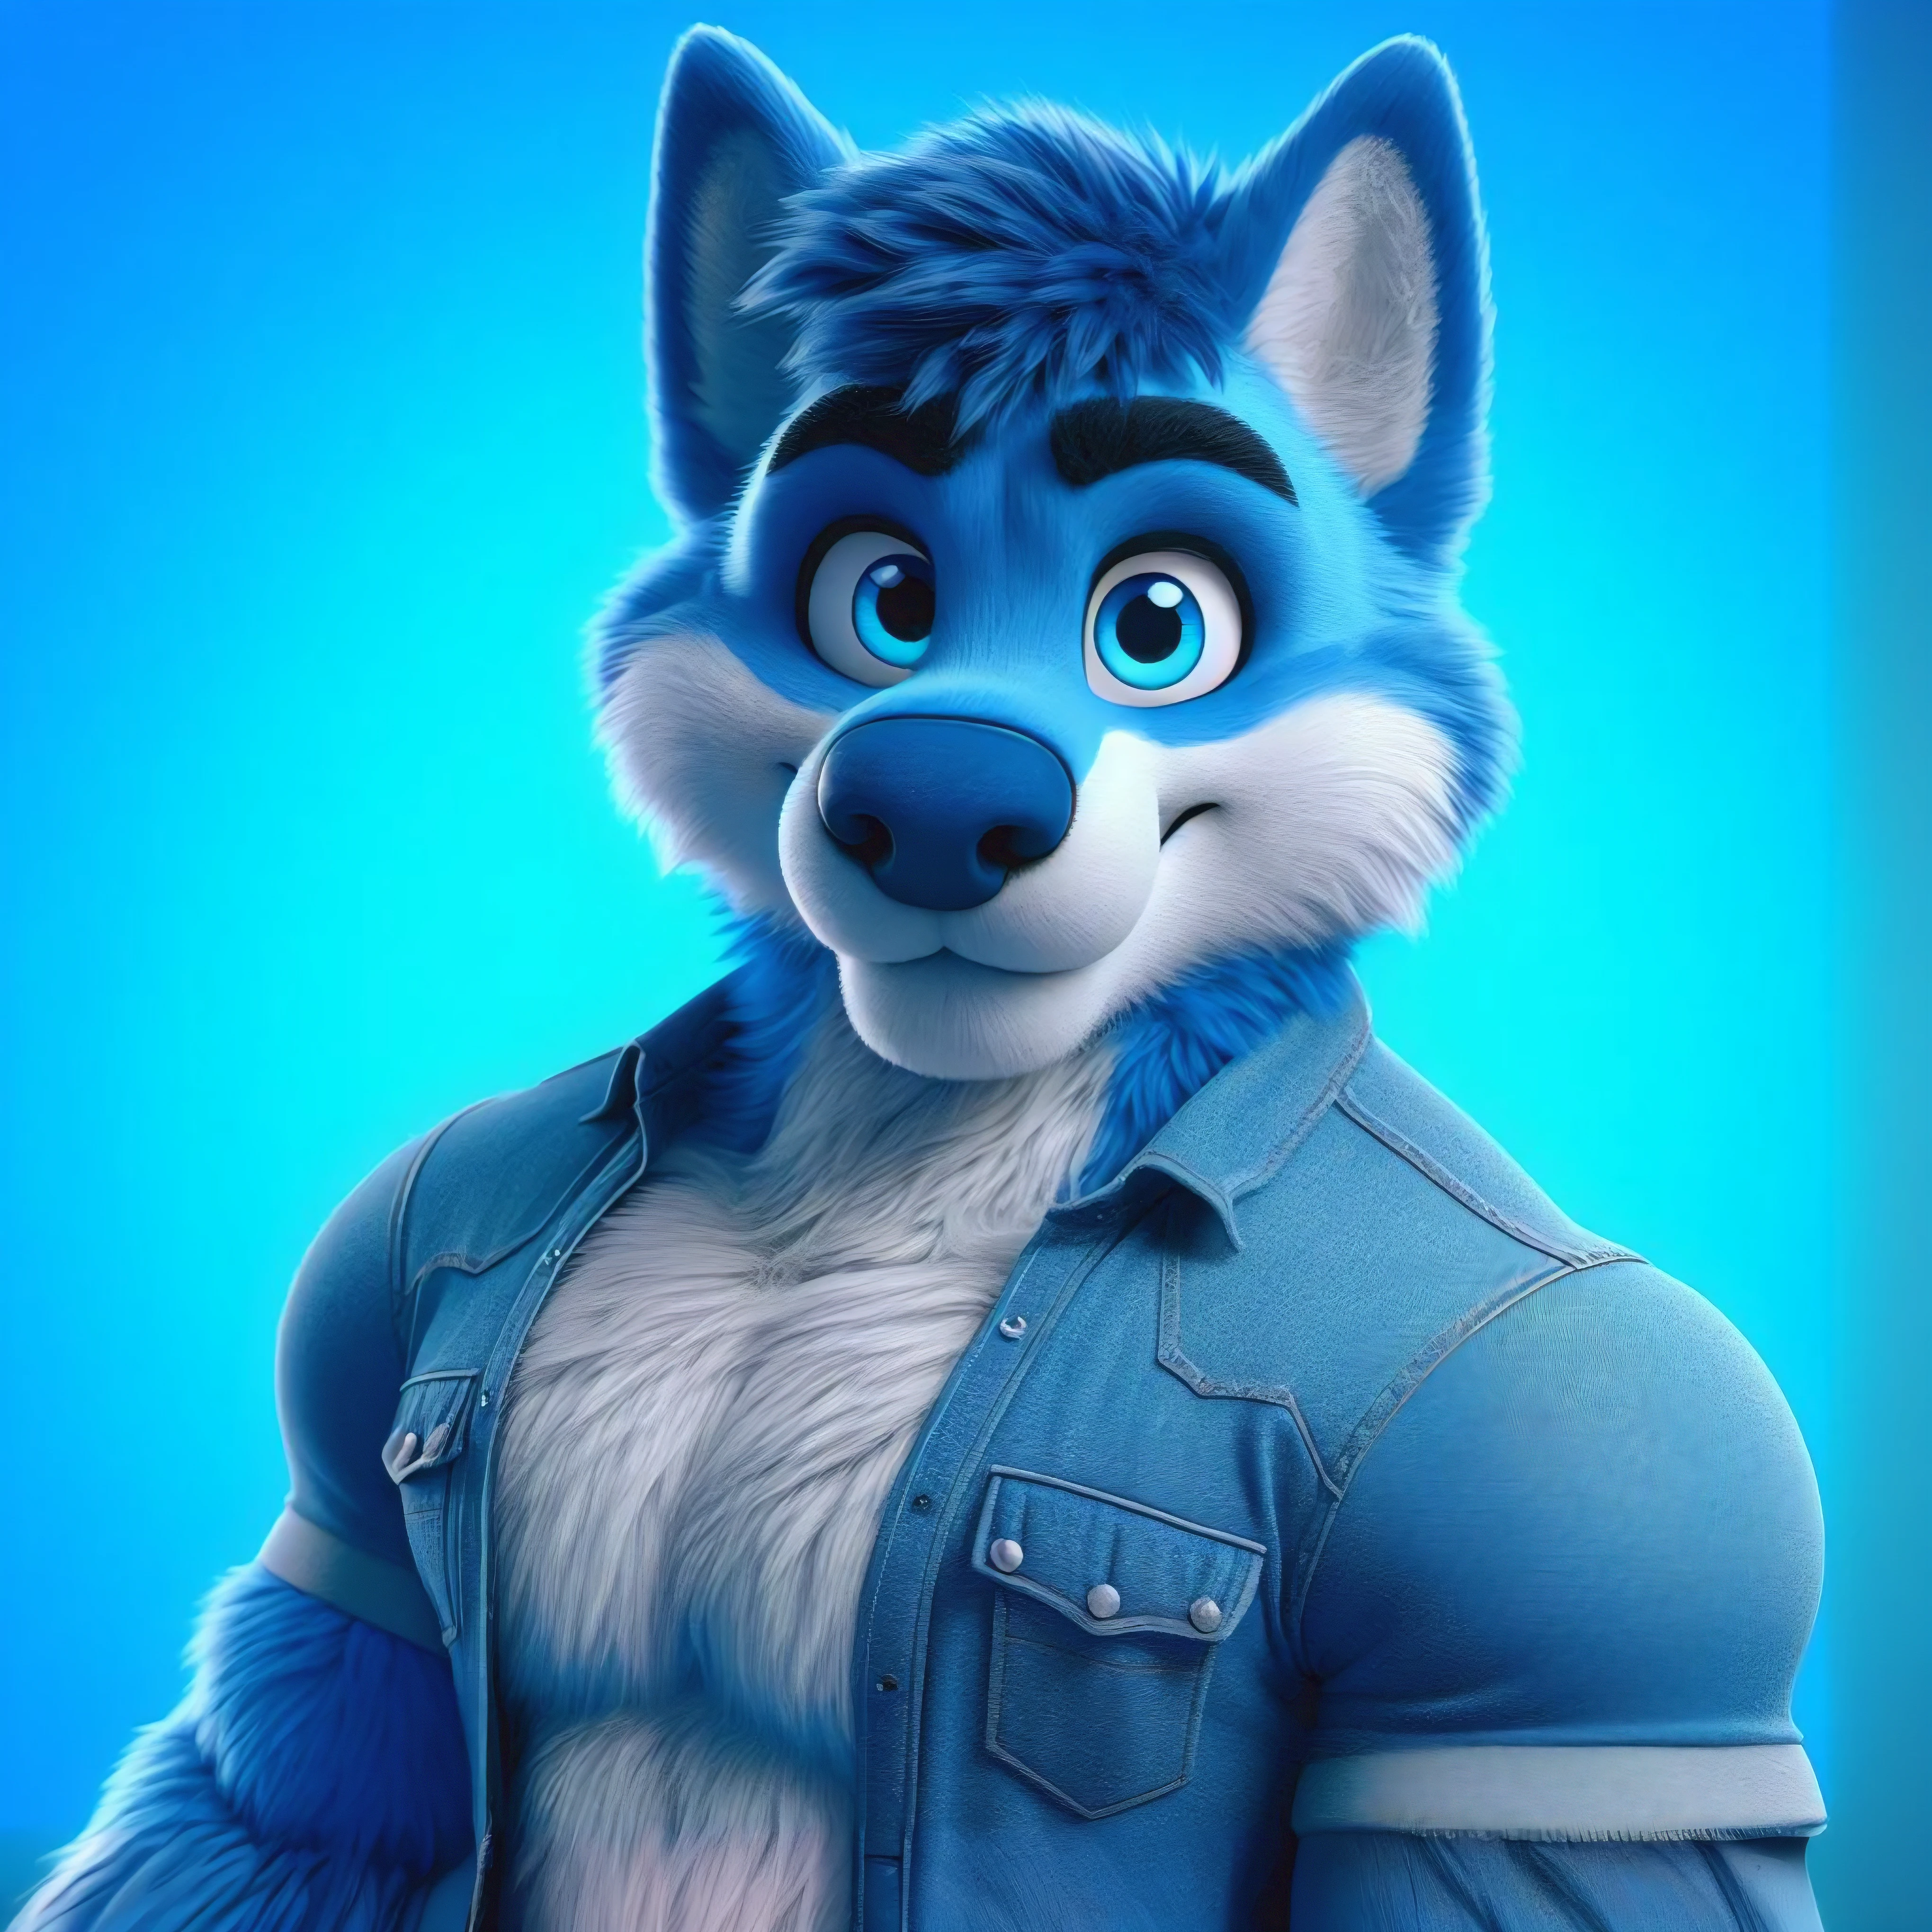 Make an image of a Disney Pixar style dibujos animados fantasy cute blue wolf,cuerpo completo masculino un fondo azul, chaqueta de mezclilla azul, estudio disney, grandes ojos azules, Hermosa imagen, dibujos animados, estilo 3D,
alto detalle. fondo azul musculoso, estudio disney, ultraresolución, 16k